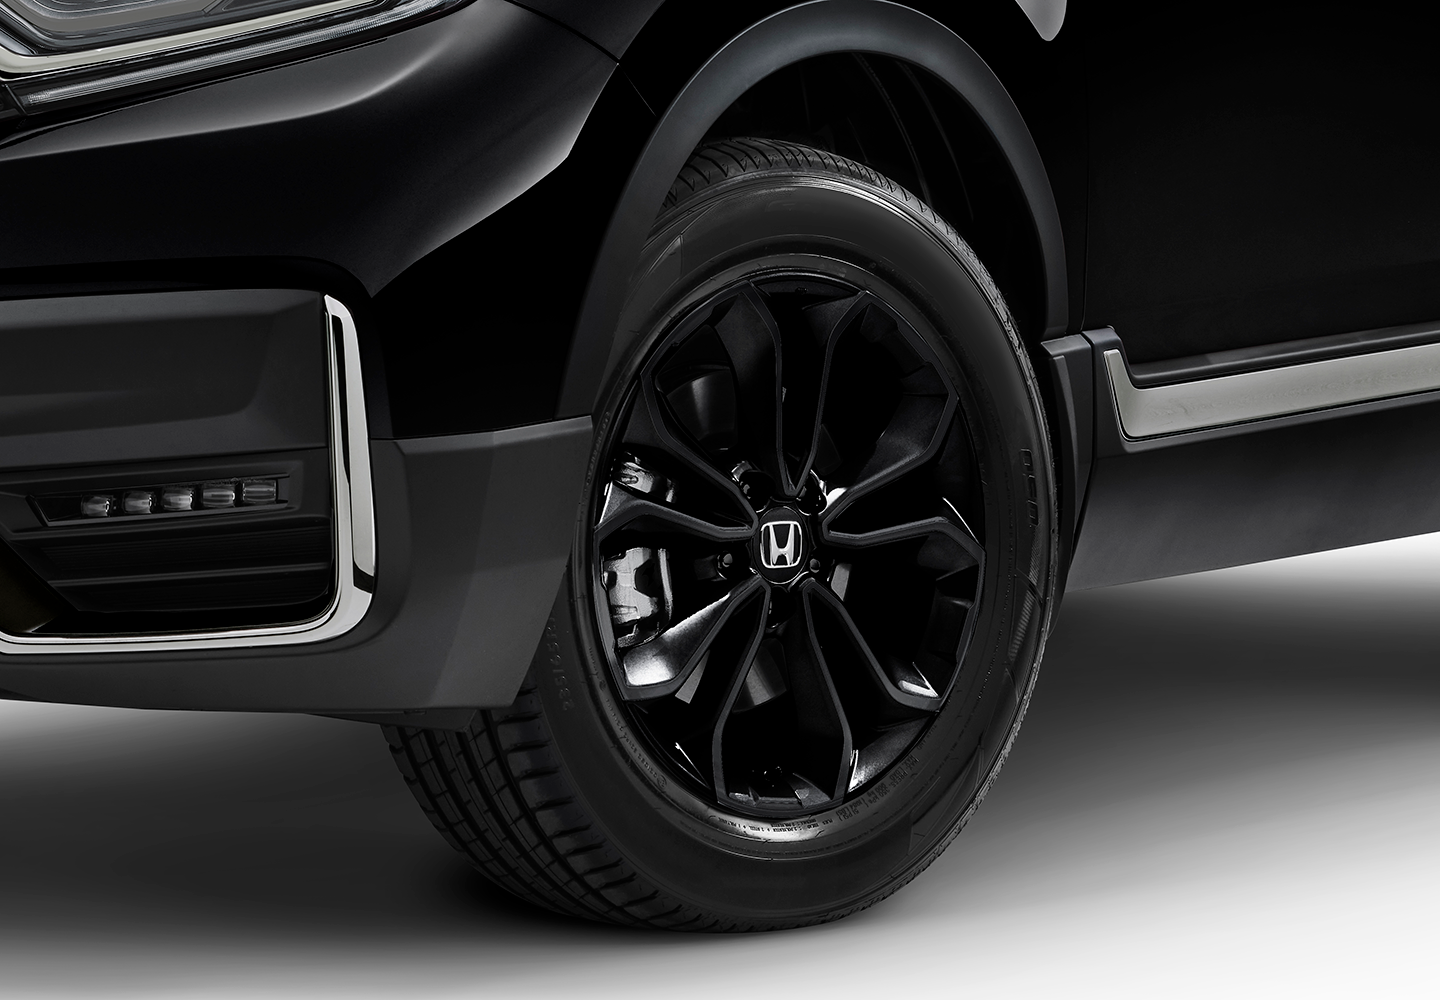 Gloss Black 18-inch Alloy Wheels